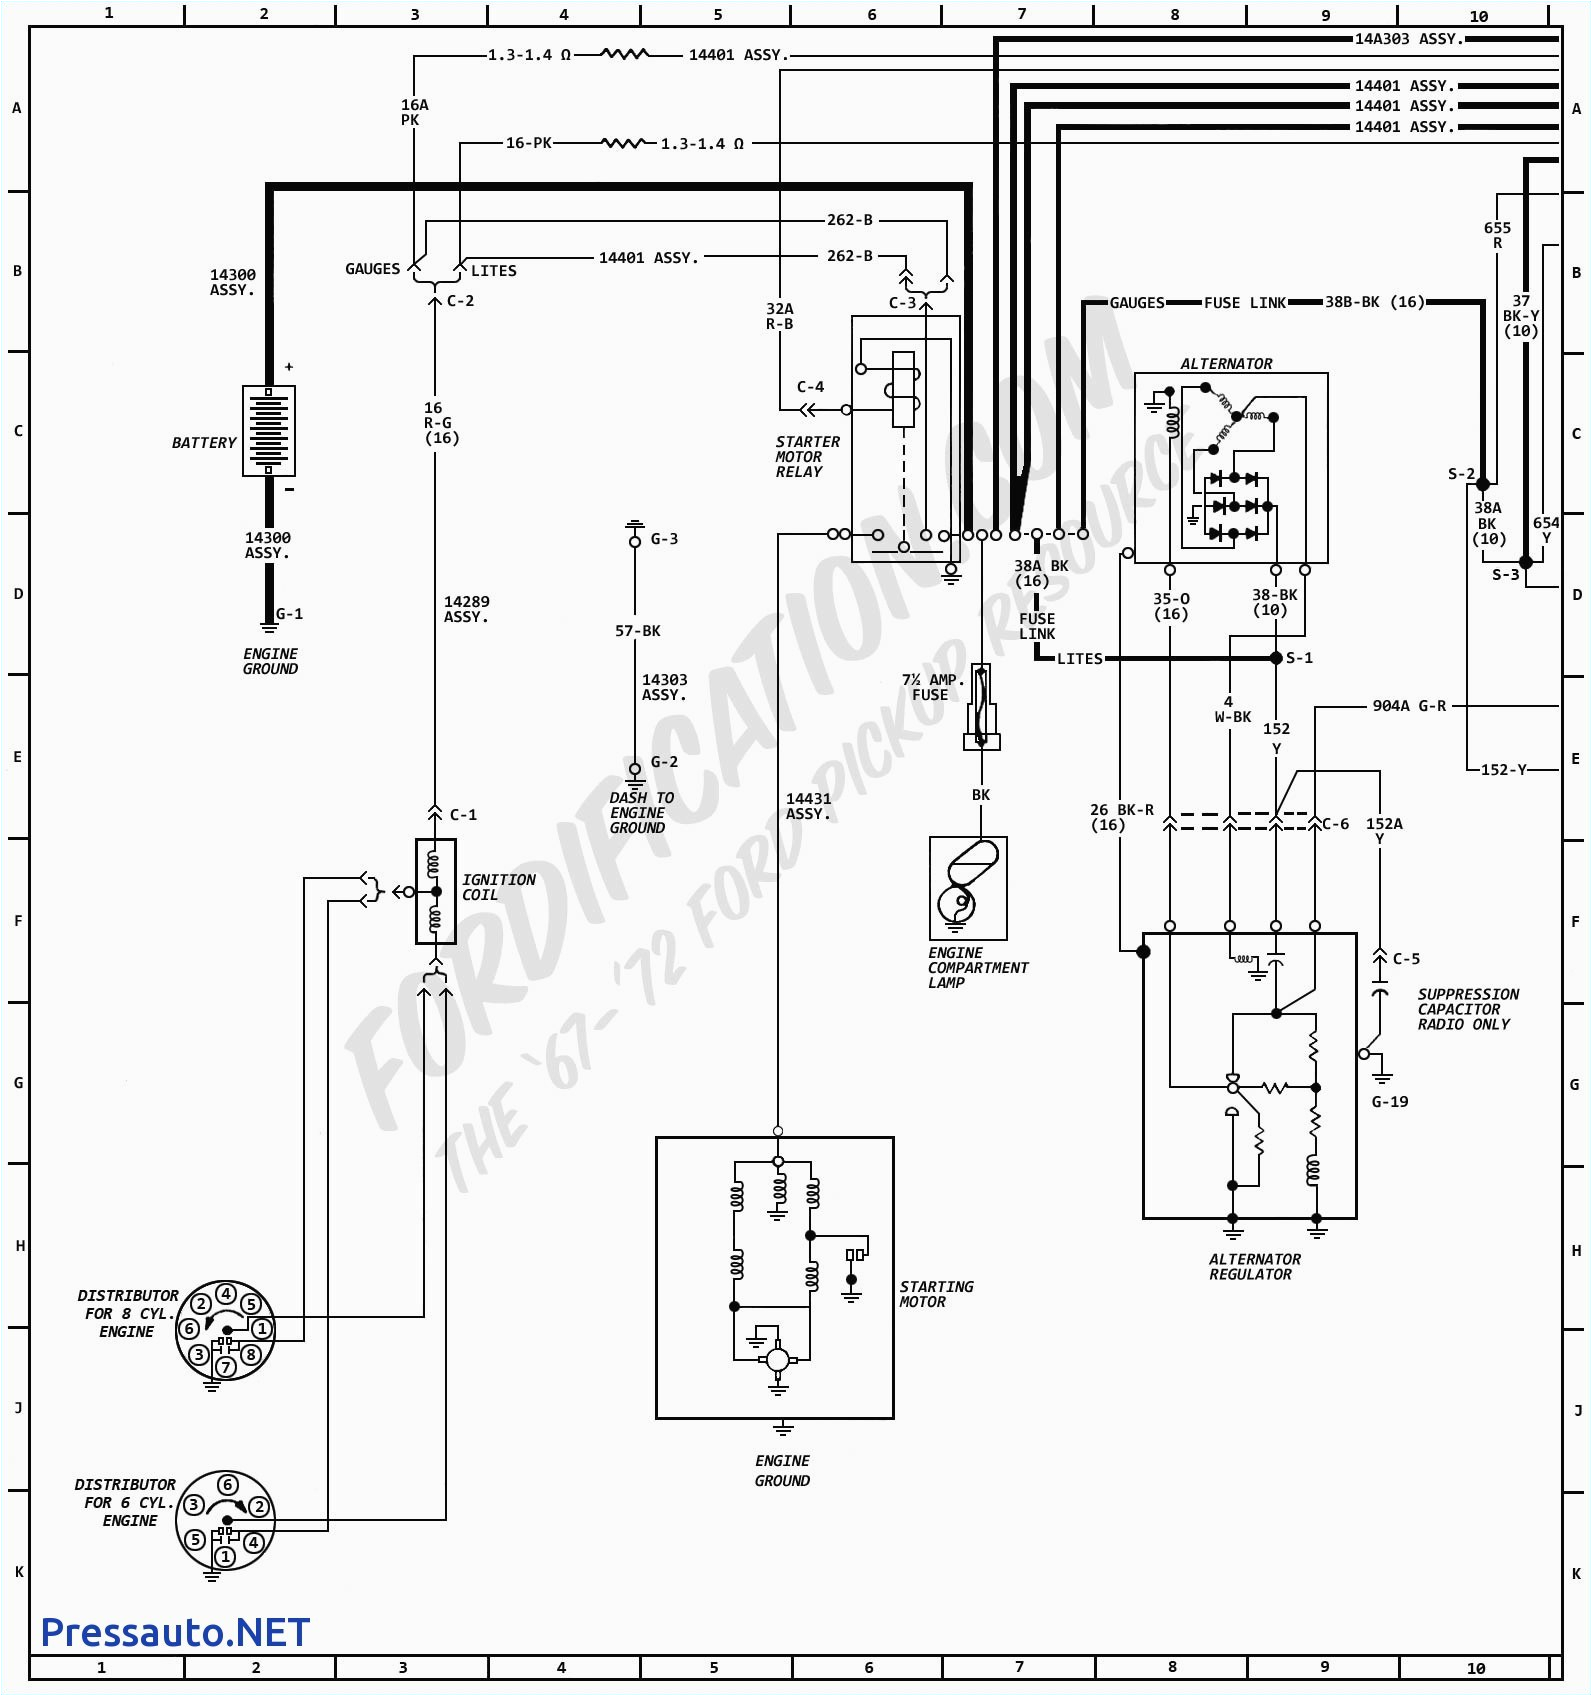 honda civic headlight wiring diagram chart pdf file chevy impala blazer 4x4 parts for sale free jpg